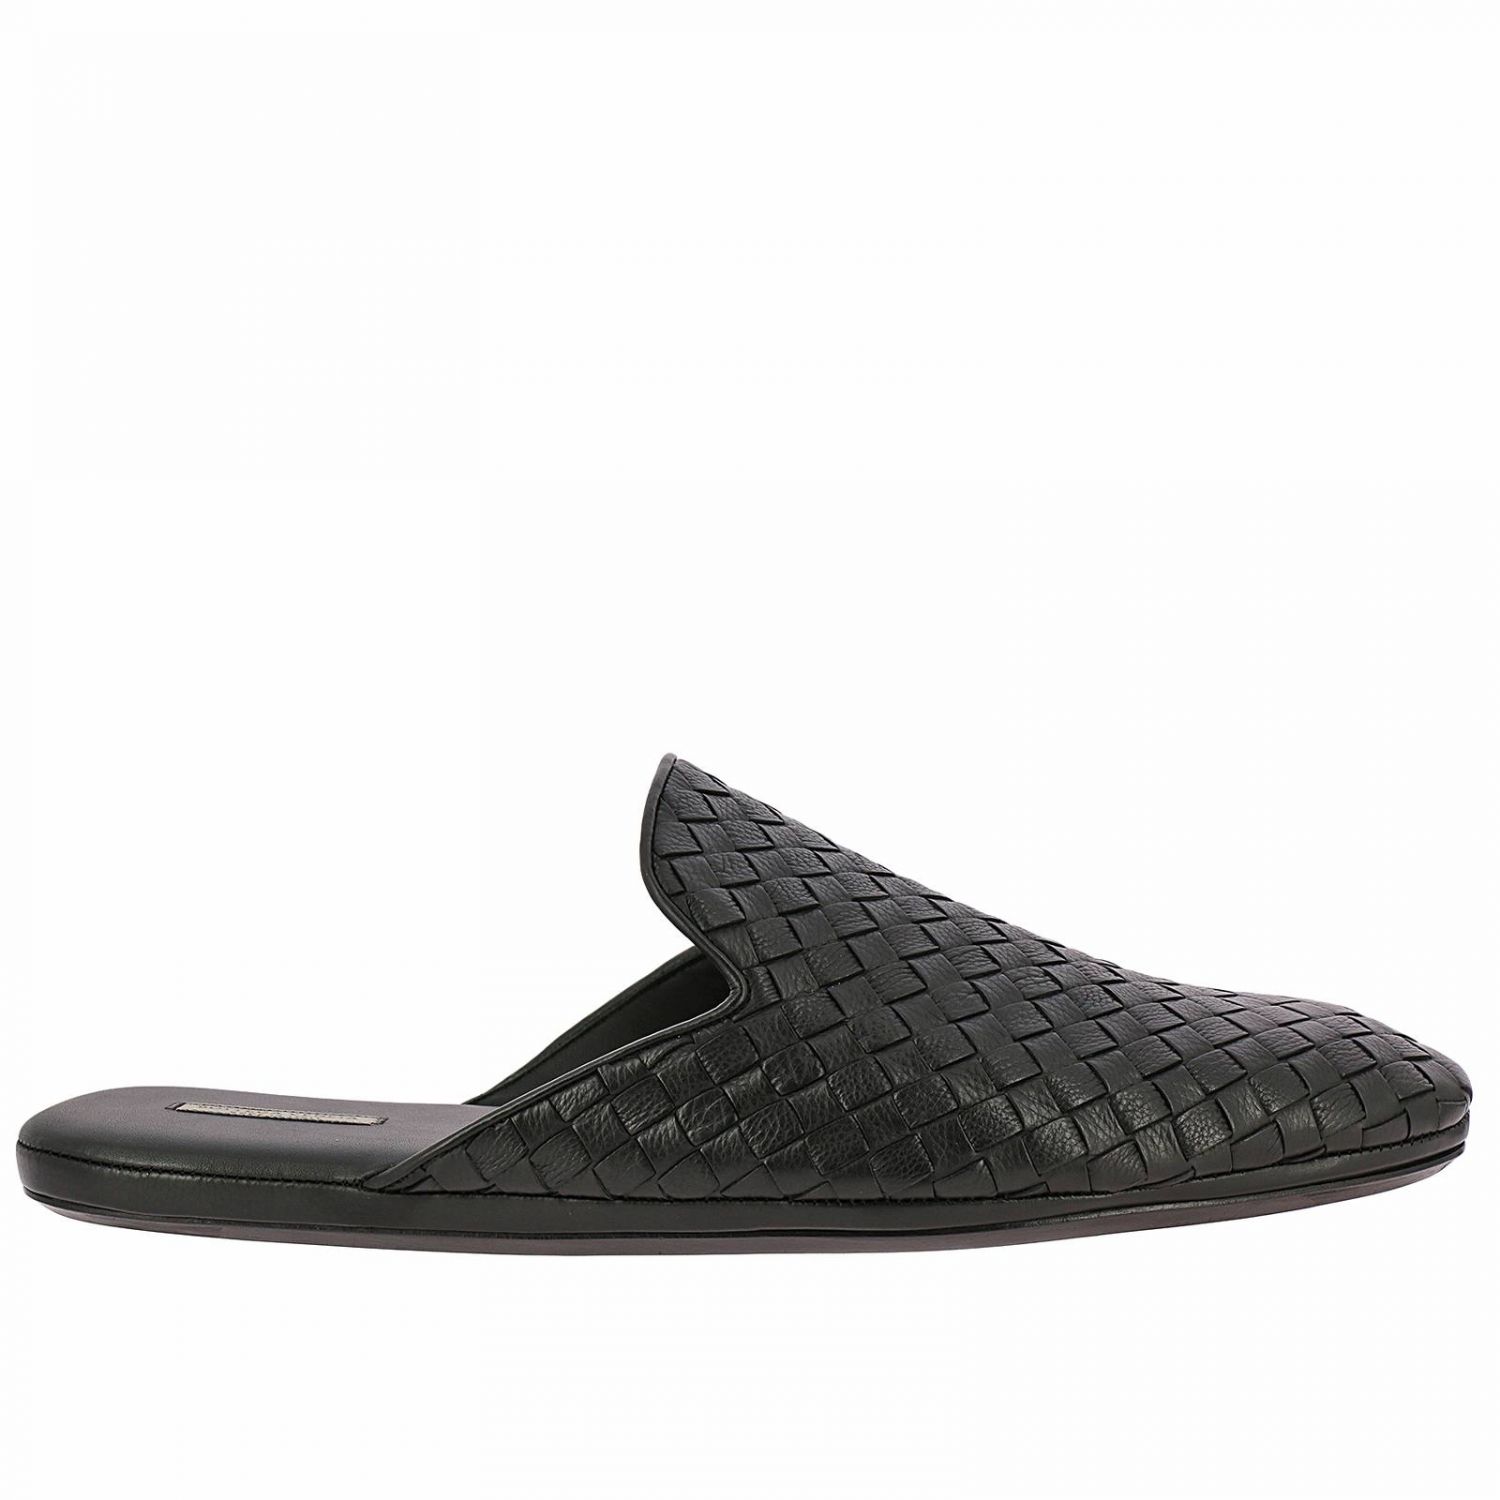 BOTTEGA VENETA: sandals for man - Black | Bottega Veneta sandals 451862 ...